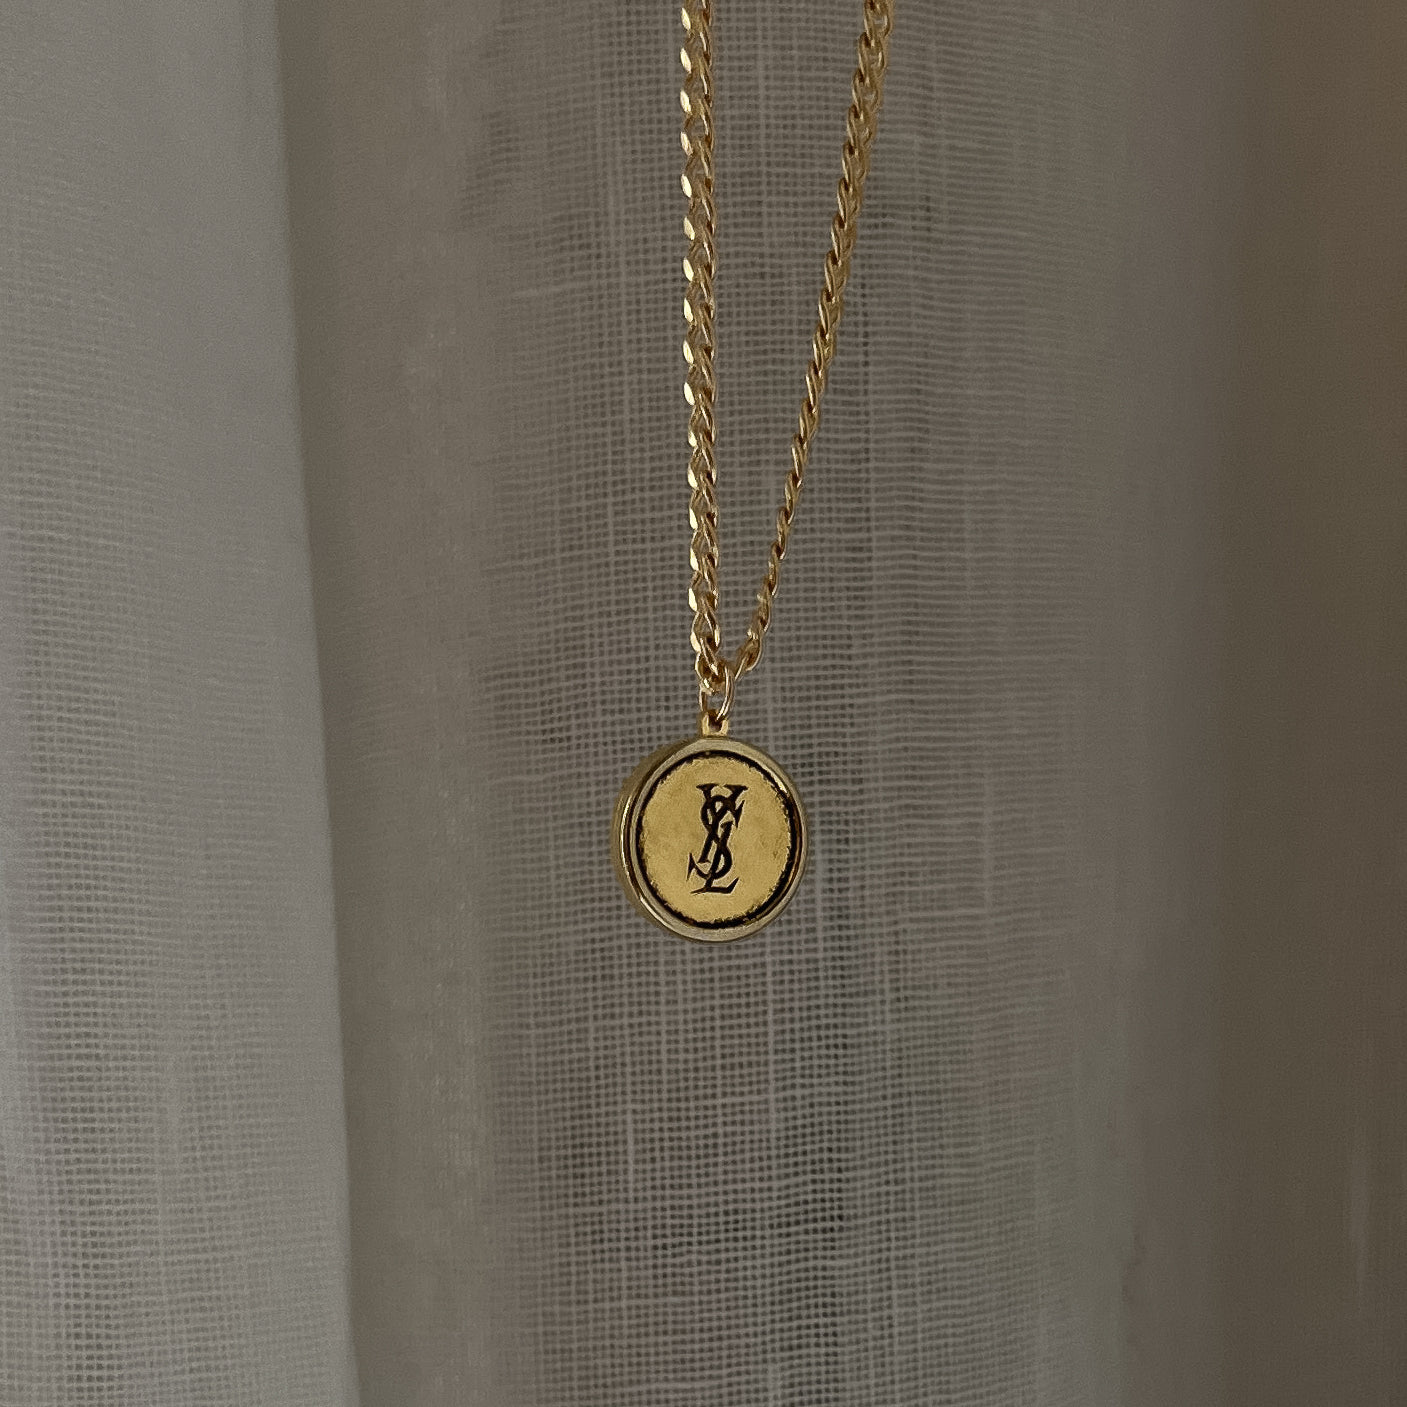 Repurposed Authentic Vintage YSL Gold Pendant Necklace